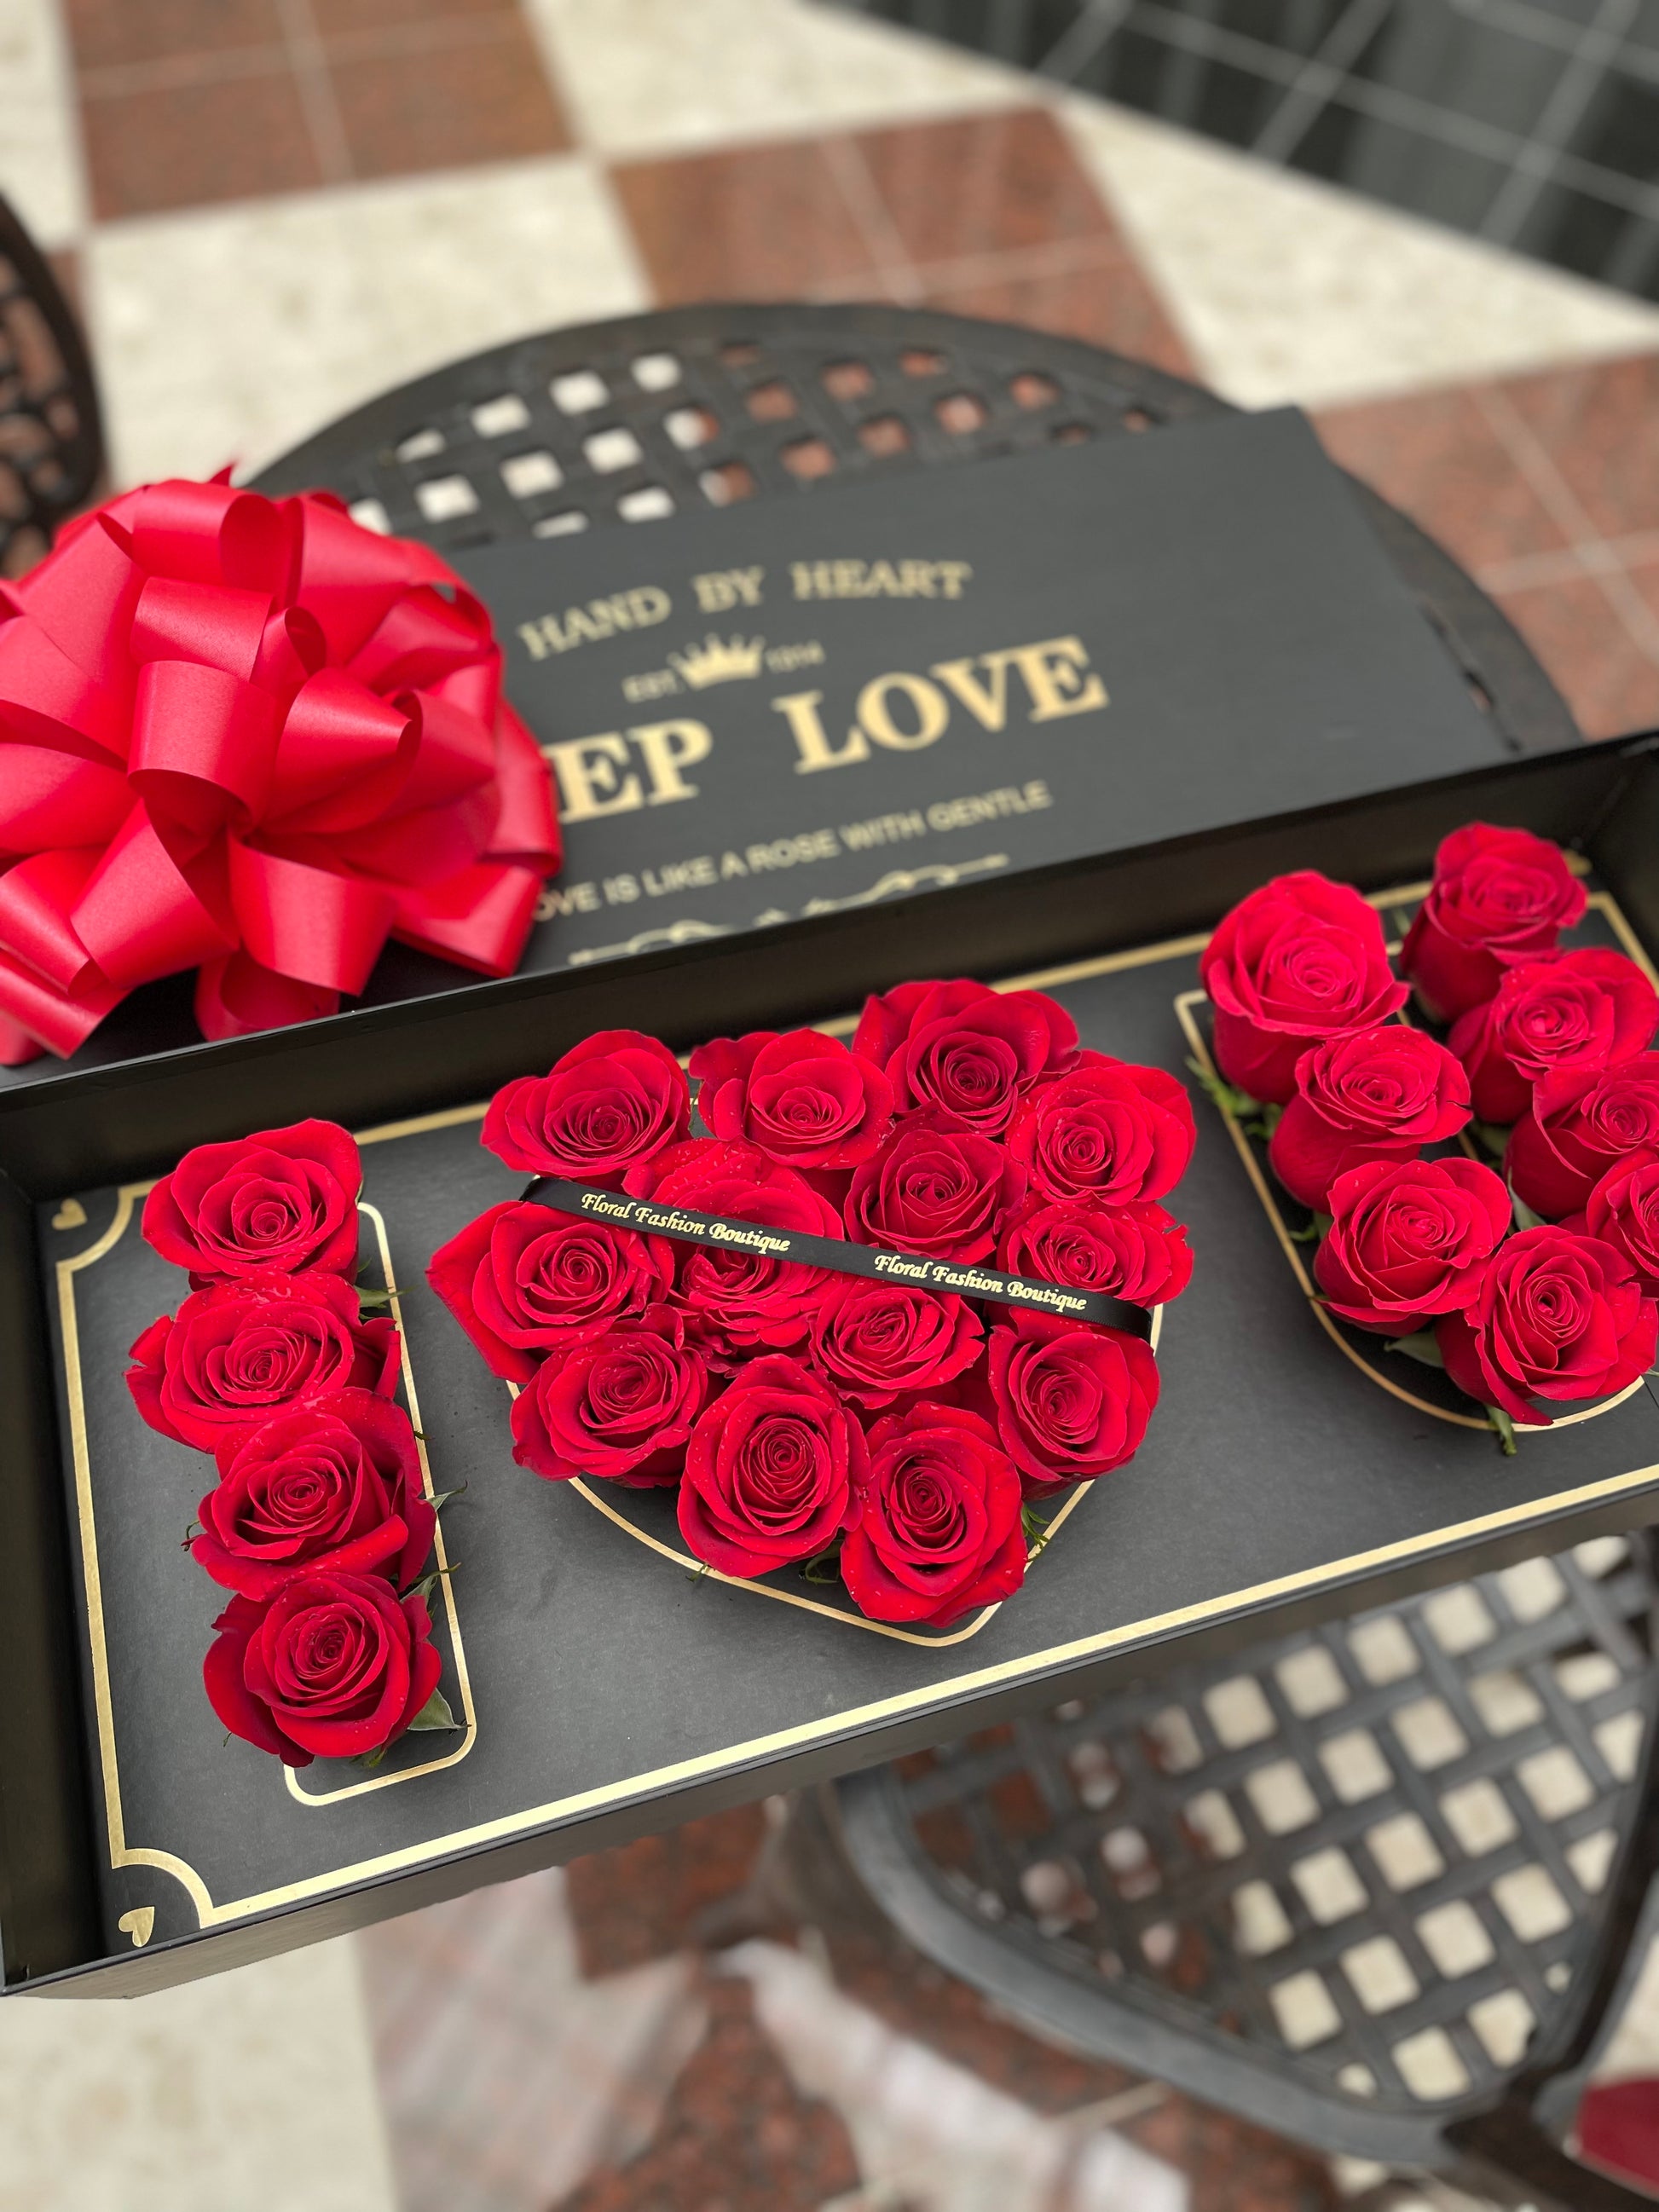 I love you! - Floral Fashion Boutique